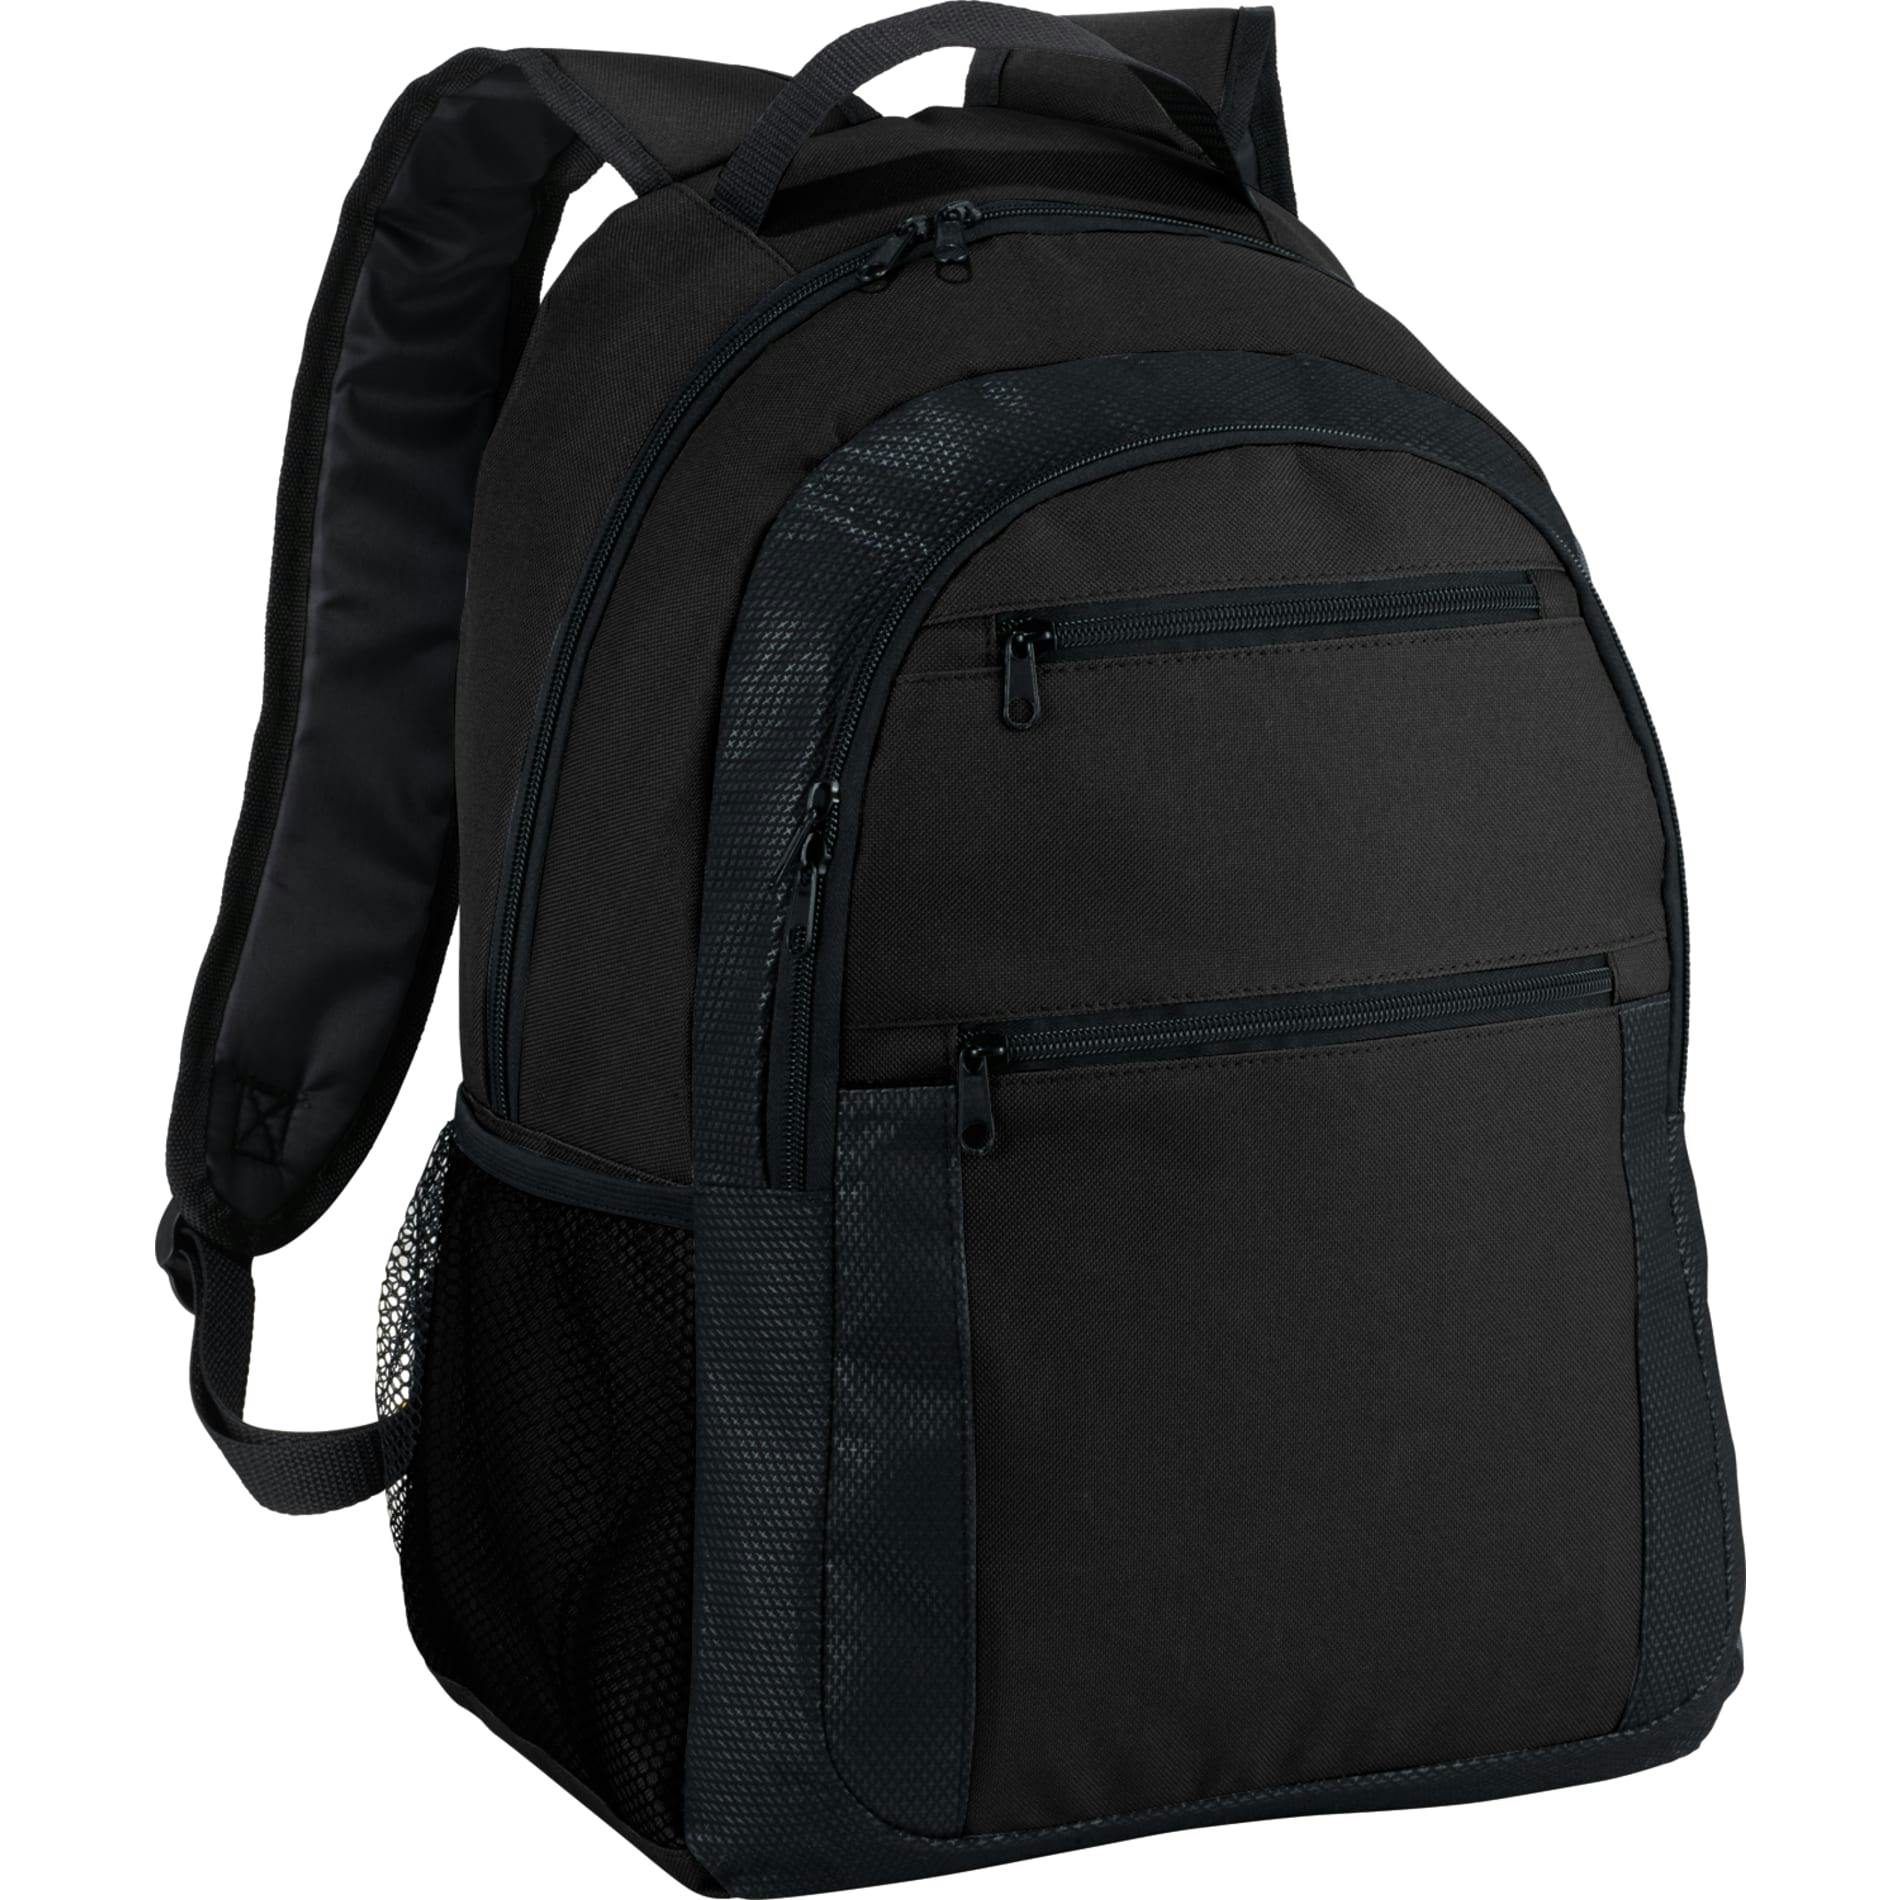 Executive 15" Computer Backpack - additional Image 2